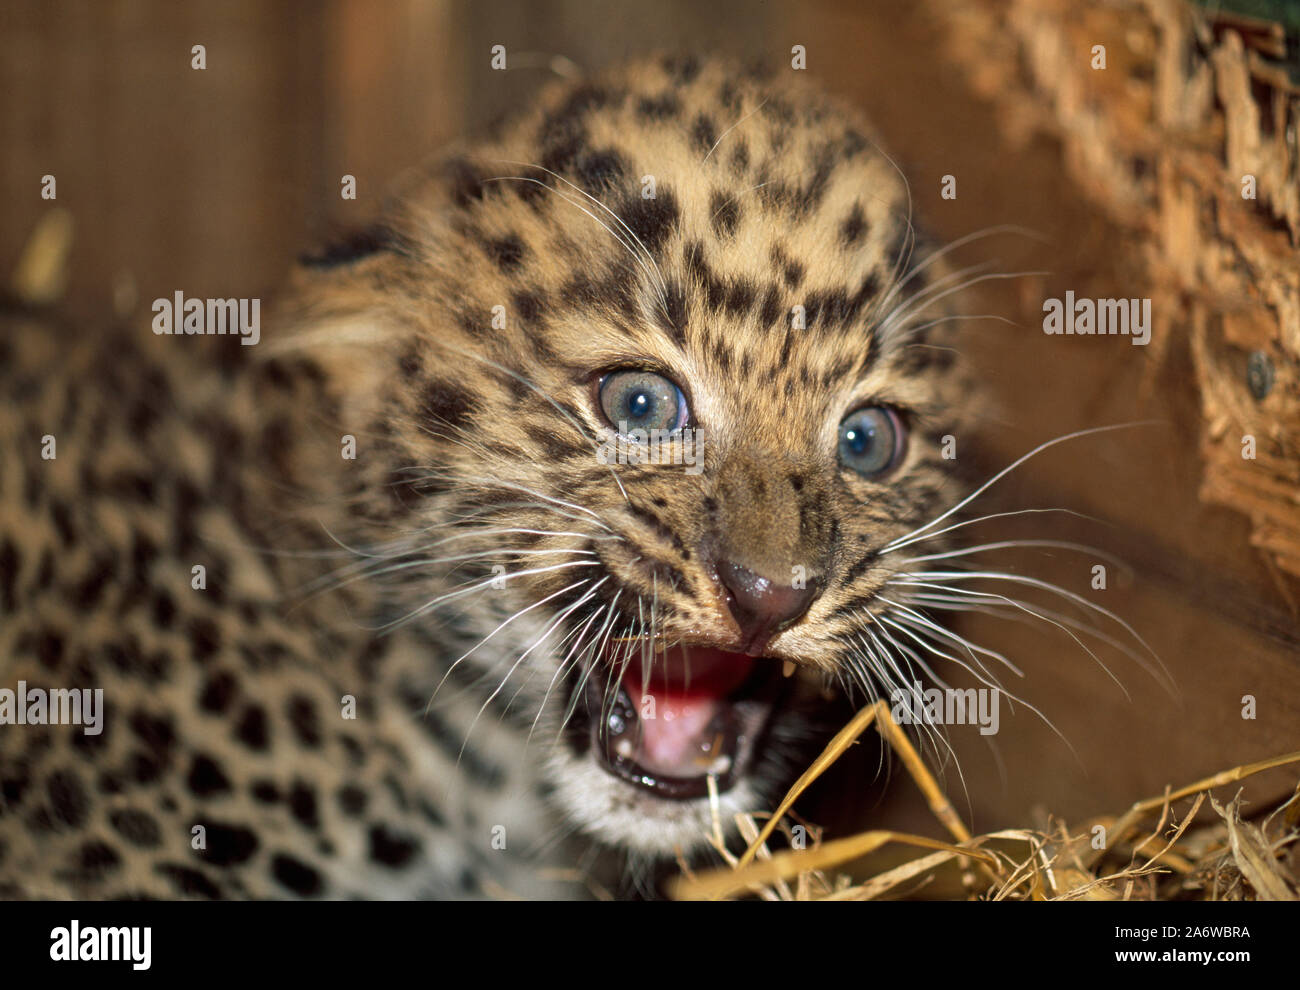 AMUR LEOPARD cub calling, (Panthera pardus orientalis). Head detail Critically endangered species. Stock Photo